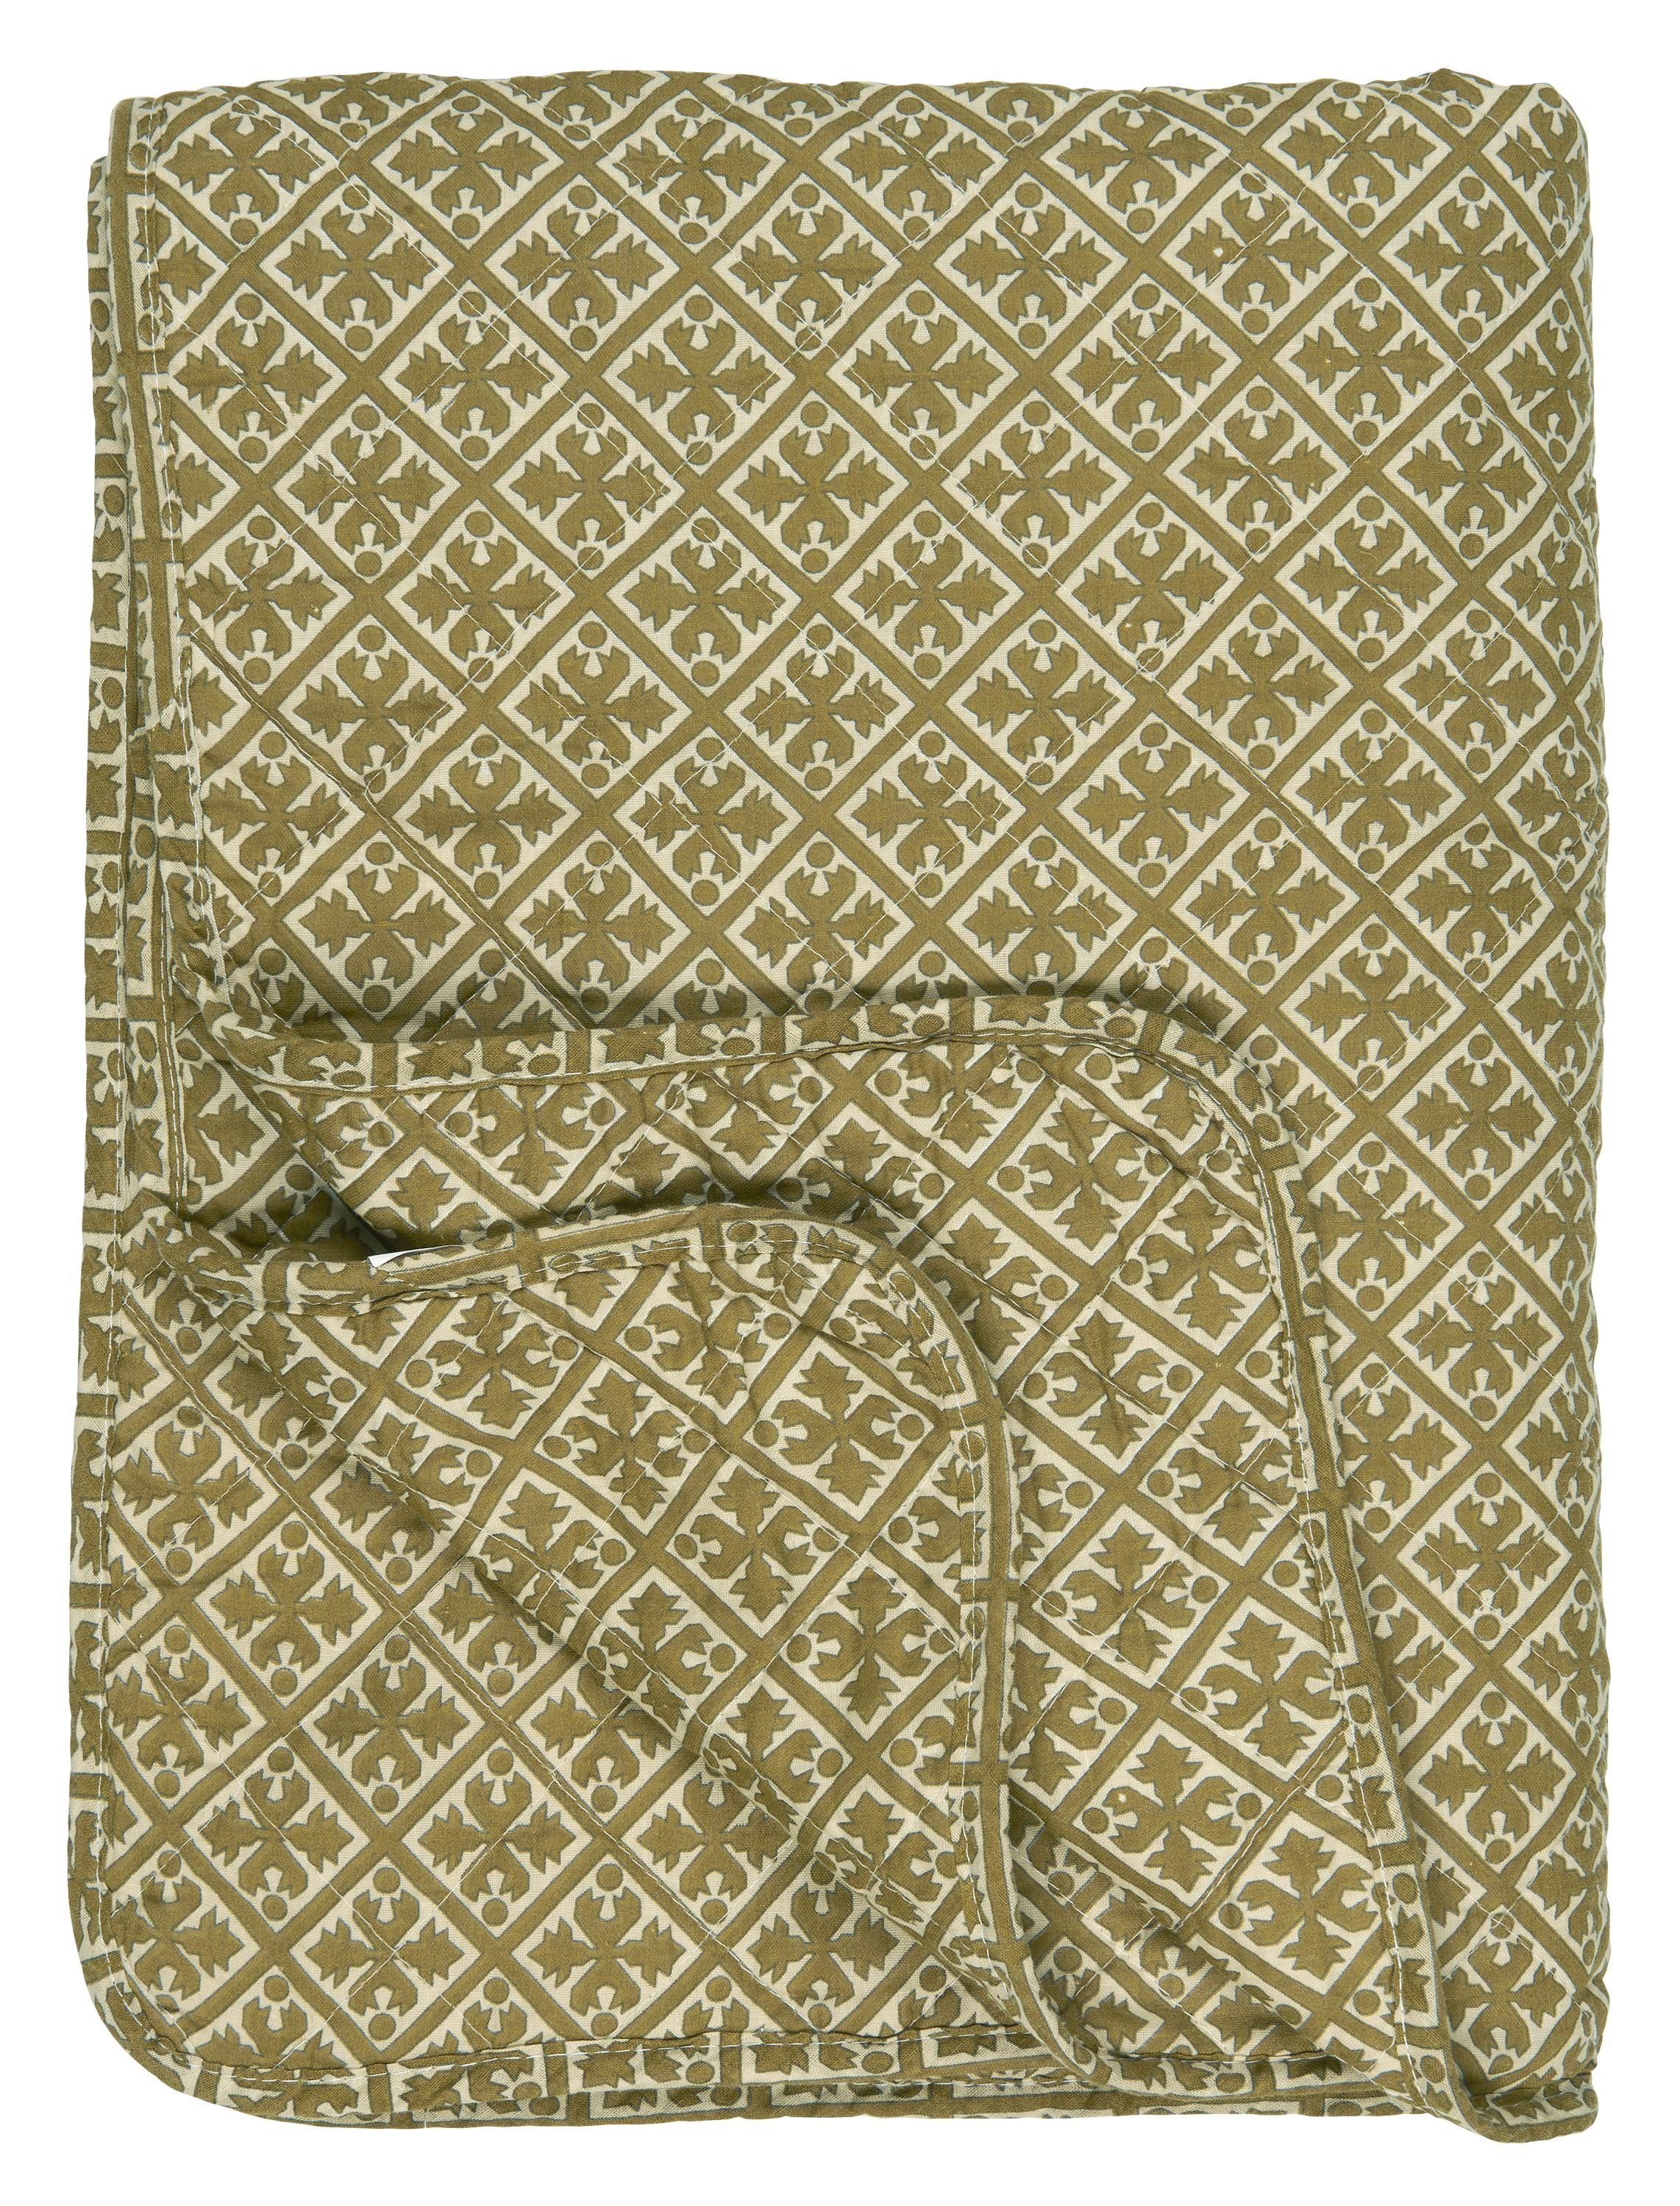 Tagesdecke Decke Quilt Tagesdecke Überwurf Olivgrün Blockmuster 180x130cm, Ib Laursen